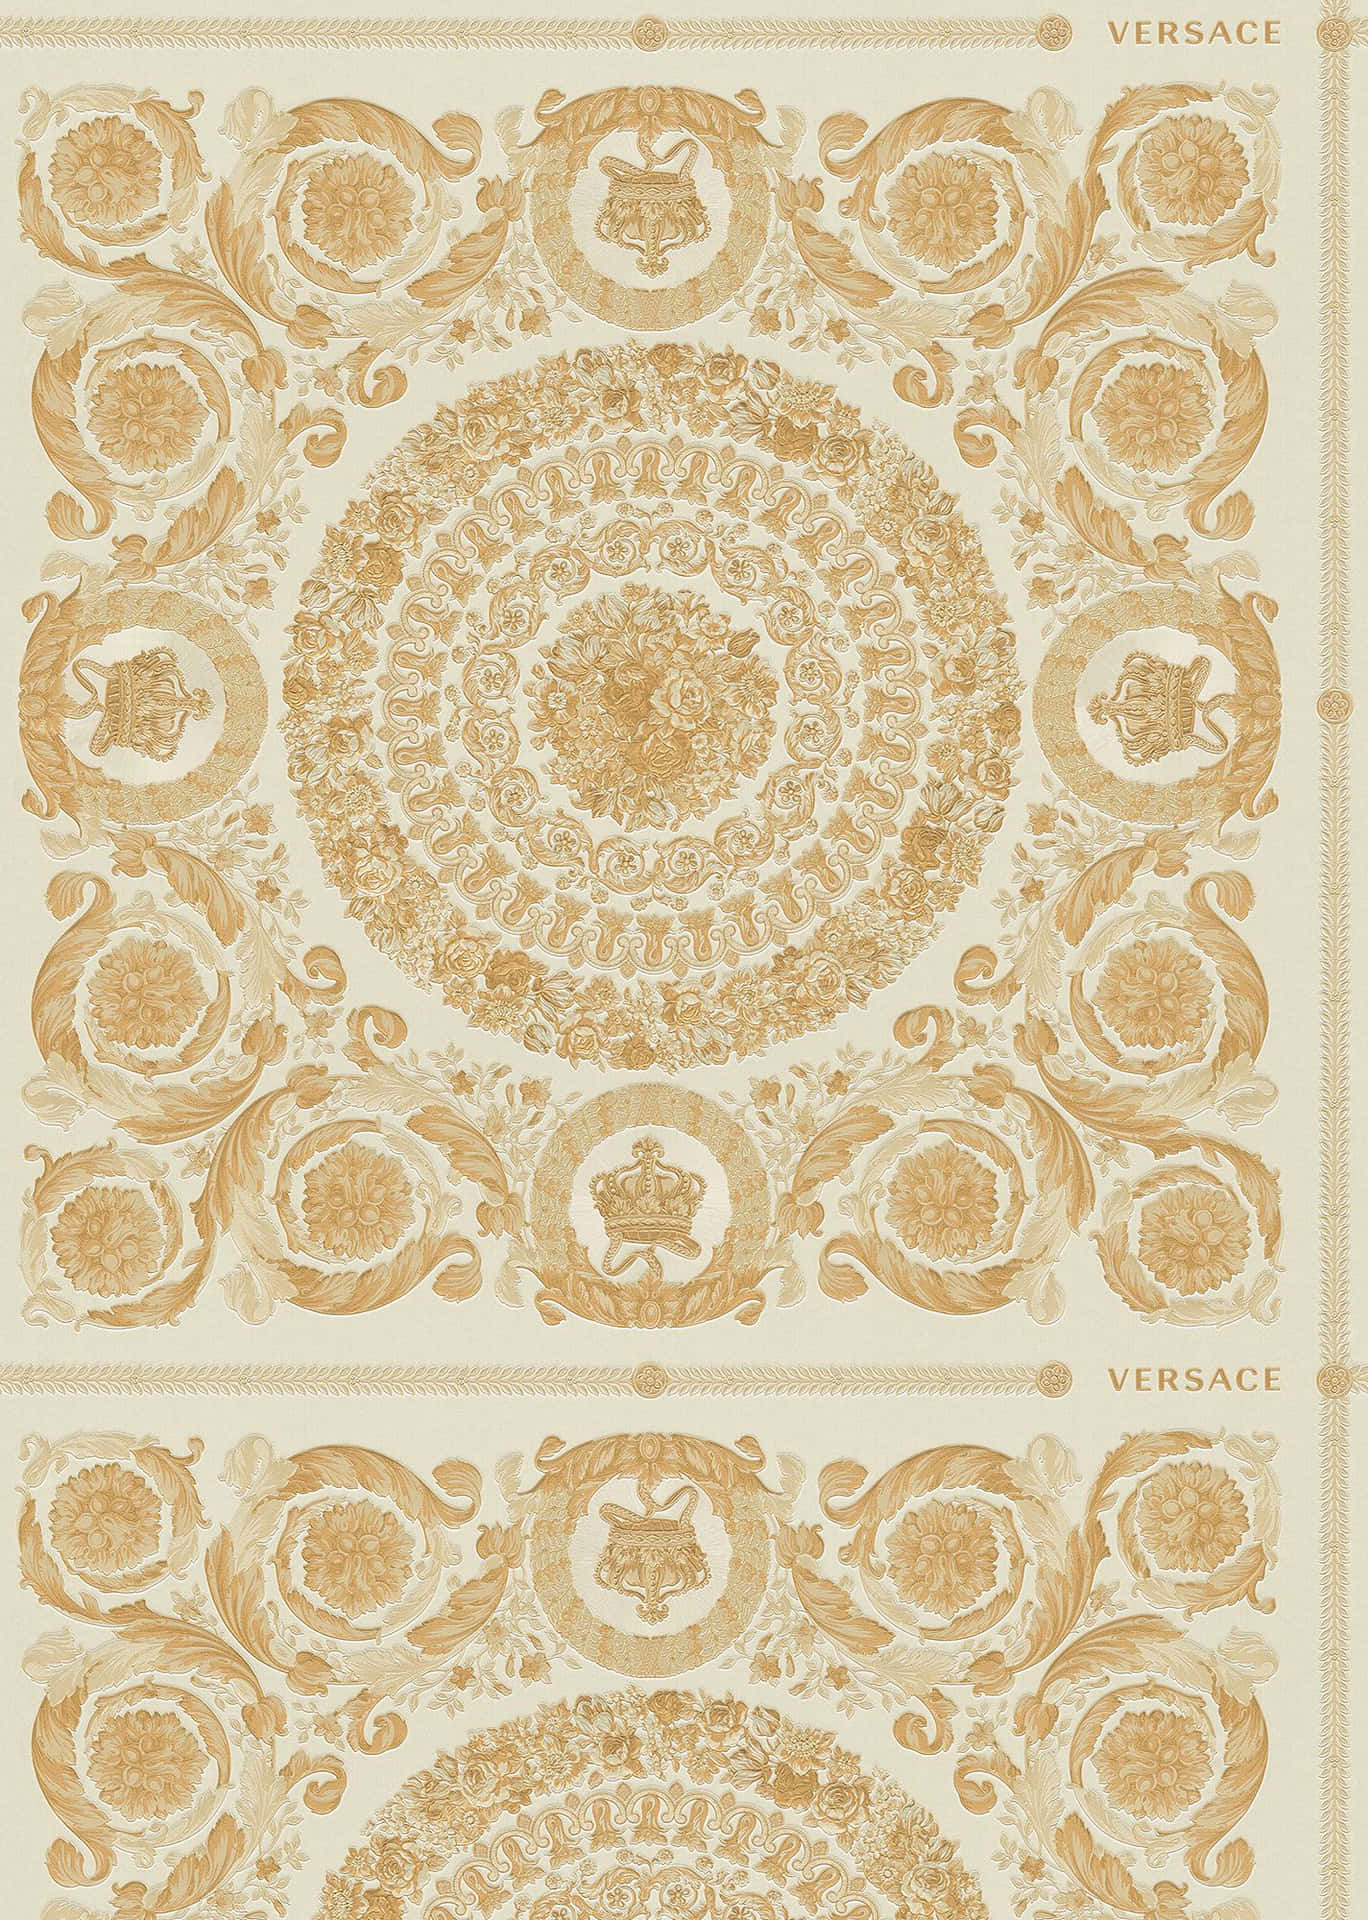 Versace Iphone Vintage Patterns Wallpaper